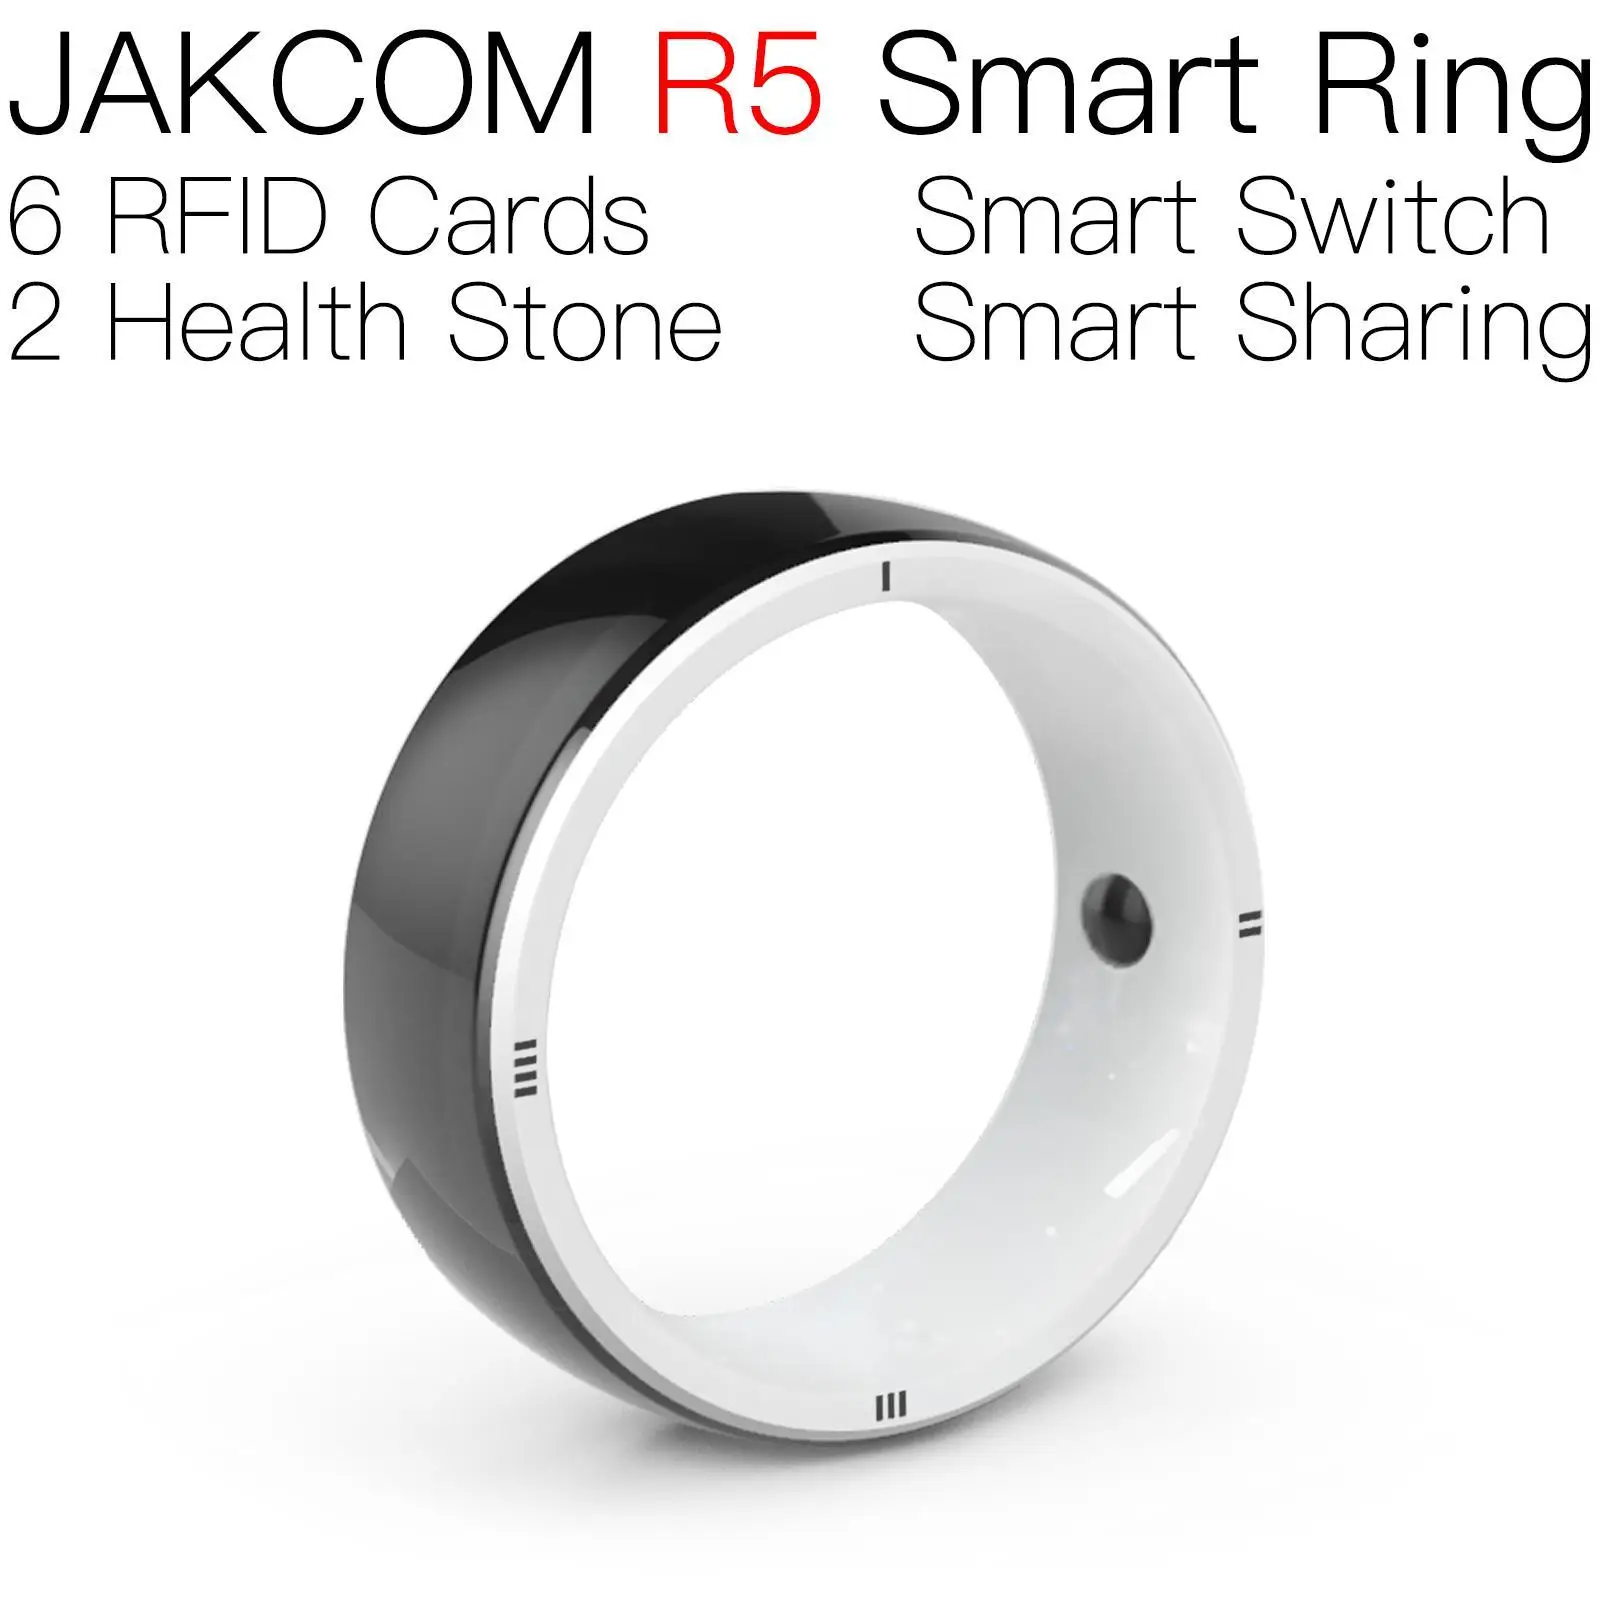 

JAKCOM R5 Smart Ring better than rfid nfc longe range skimming metal blank uhf handy s905d chip tag 200 bytes micro 125khz